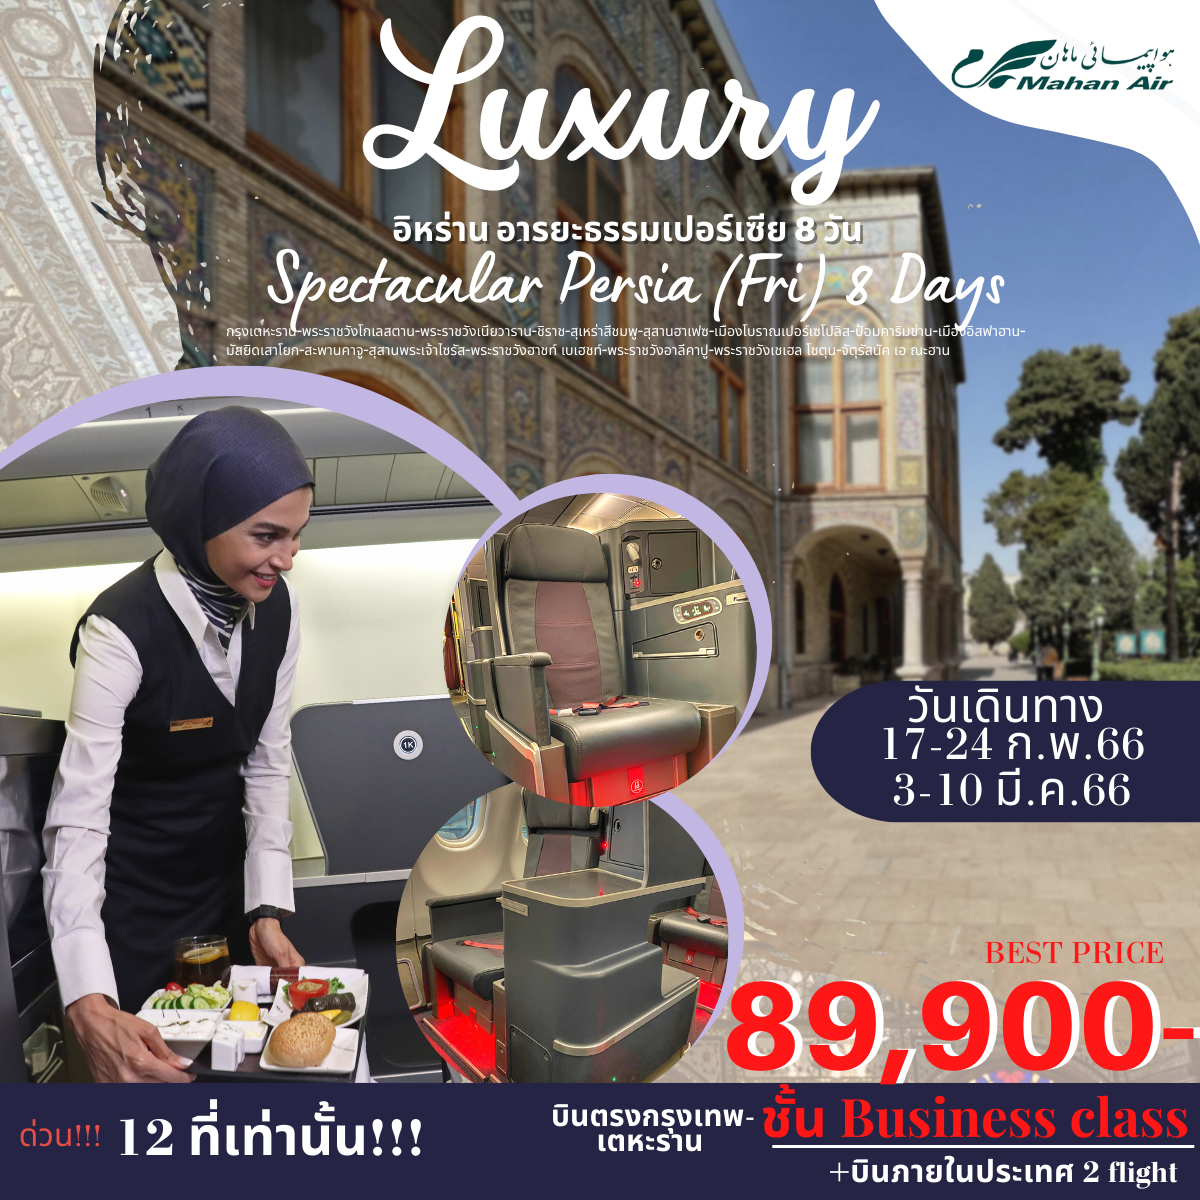 Luxury Spectacular Persia (Fri) 8 Days 6 Nights อิหร่าน อารยะธรรมเปอร์เซีย 8 วัน